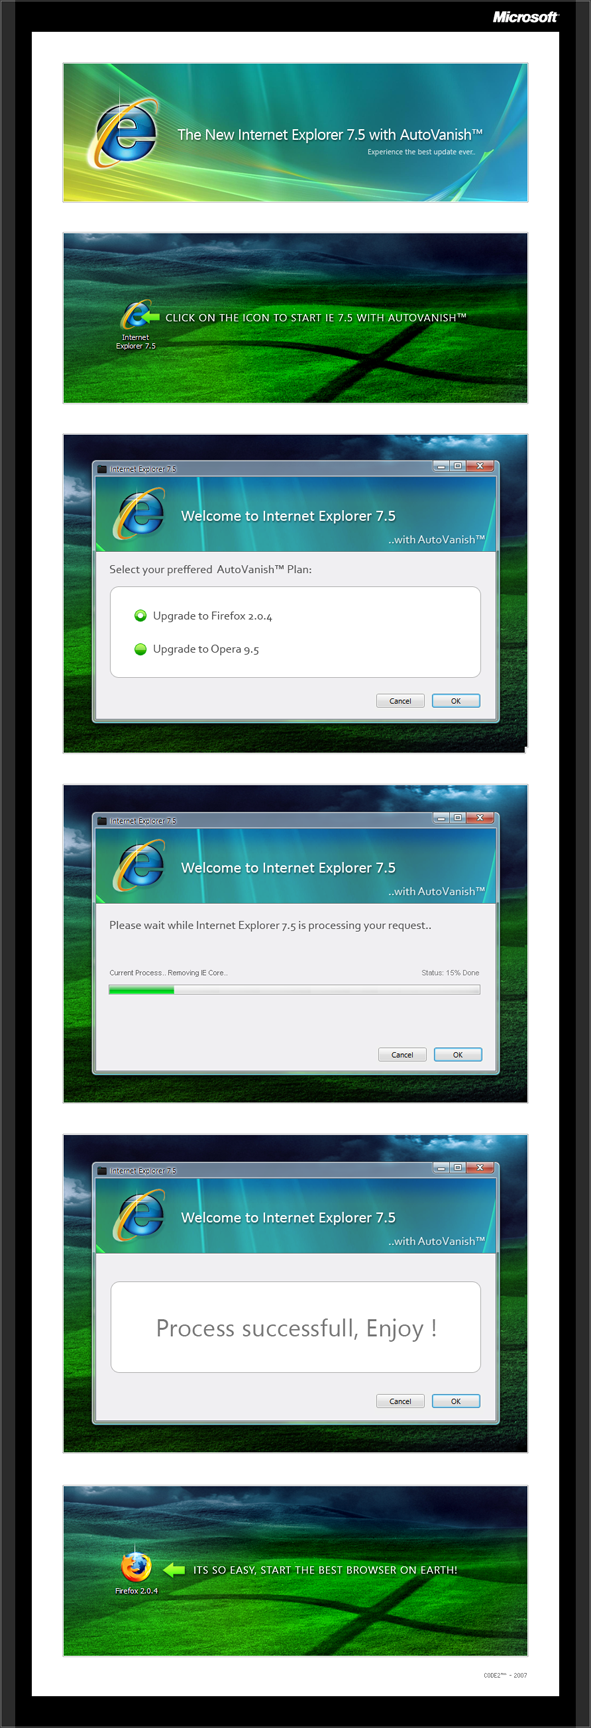 Internet Explorer 7.5 with AutoVanish (Picture)